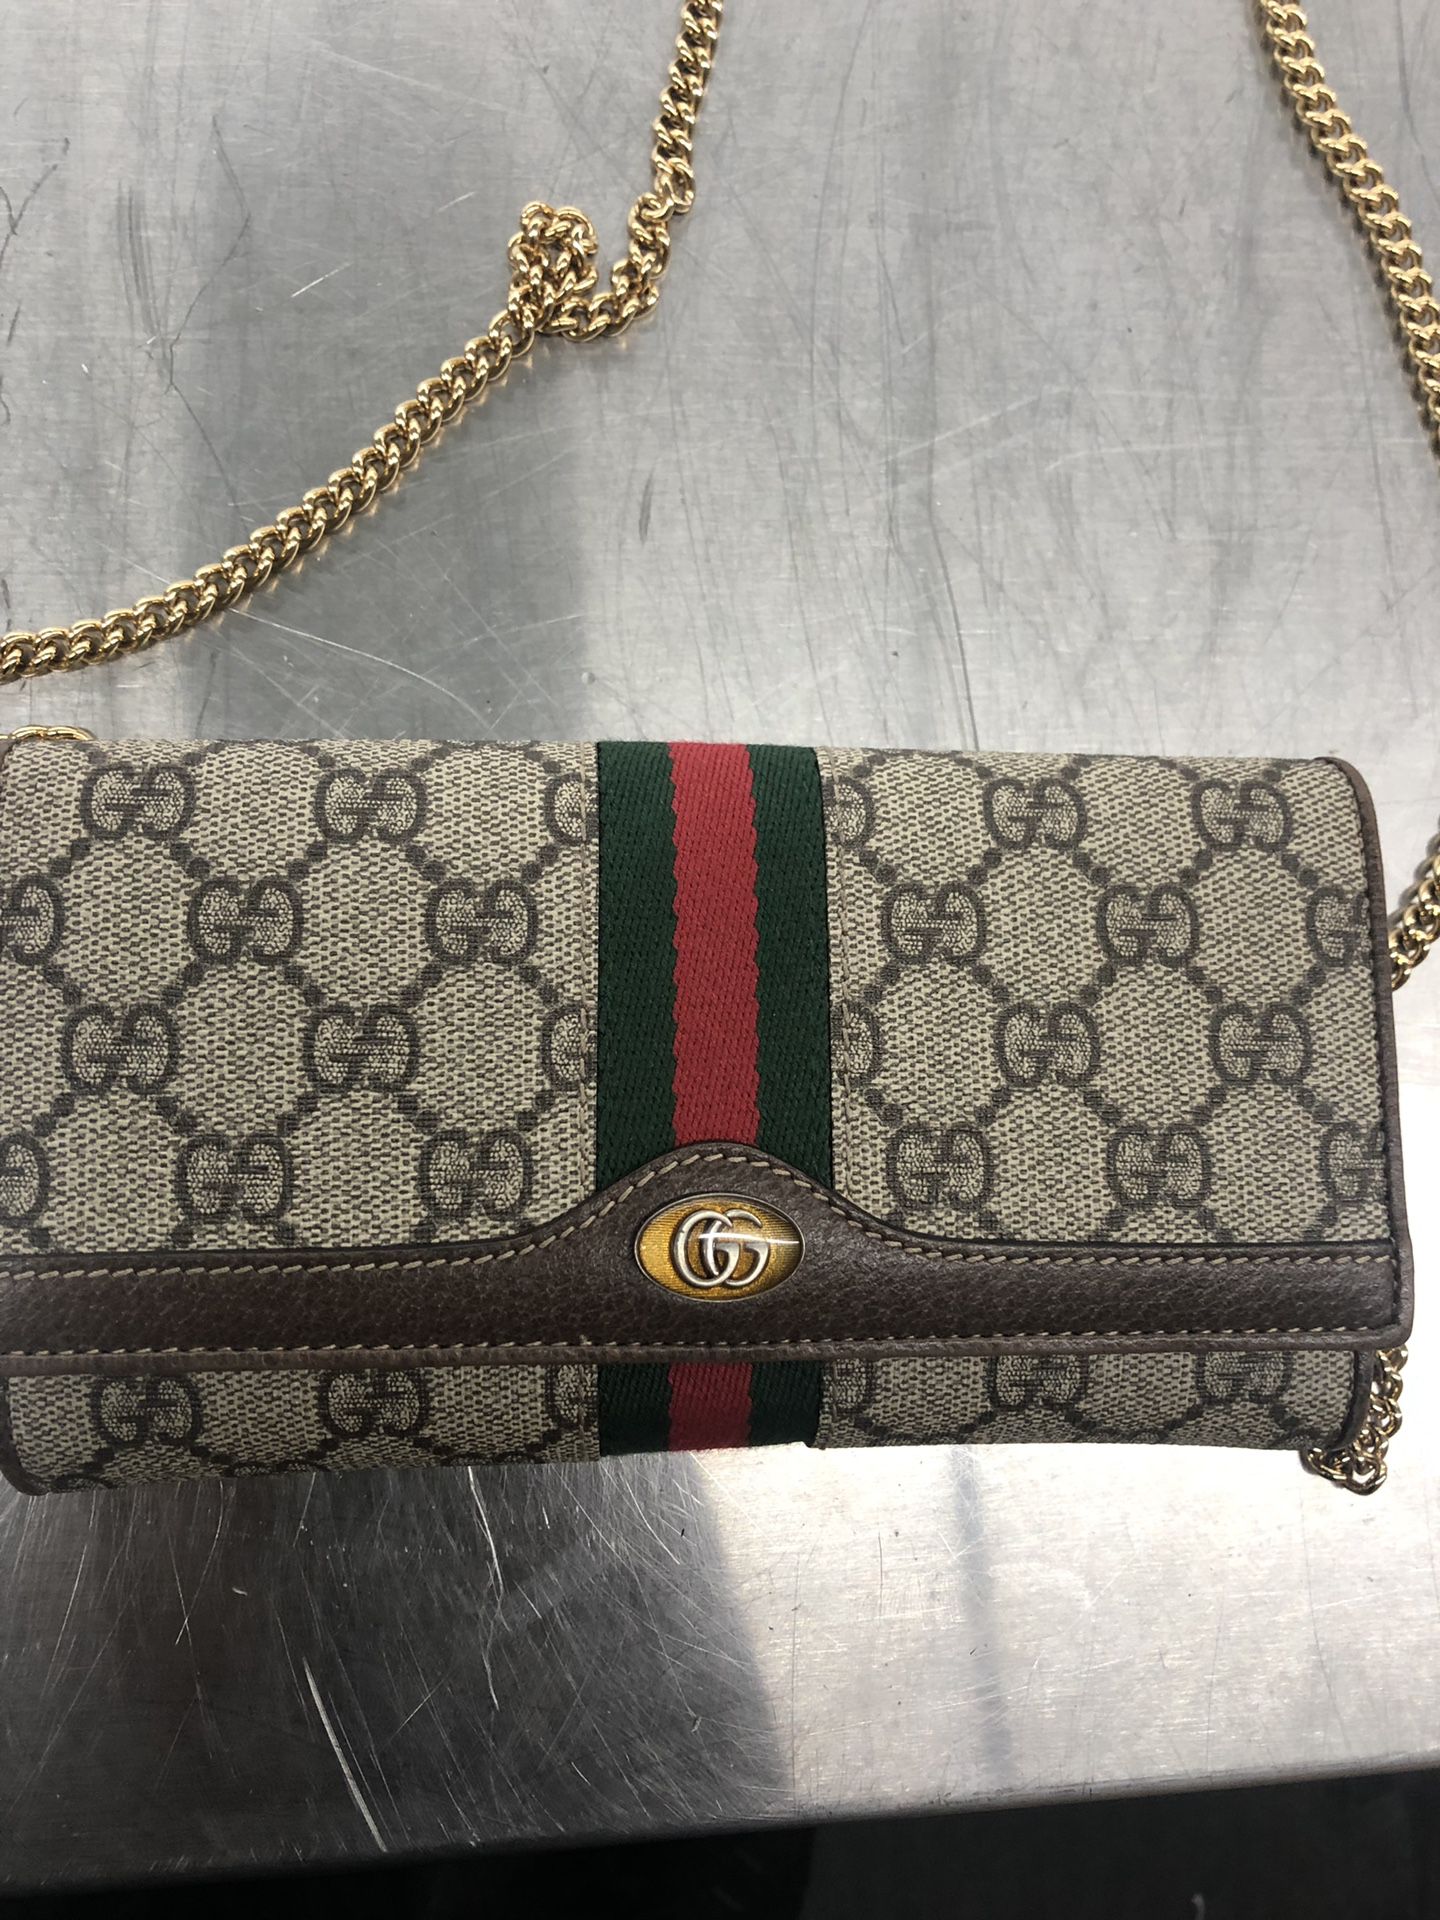 Gucci side wallet